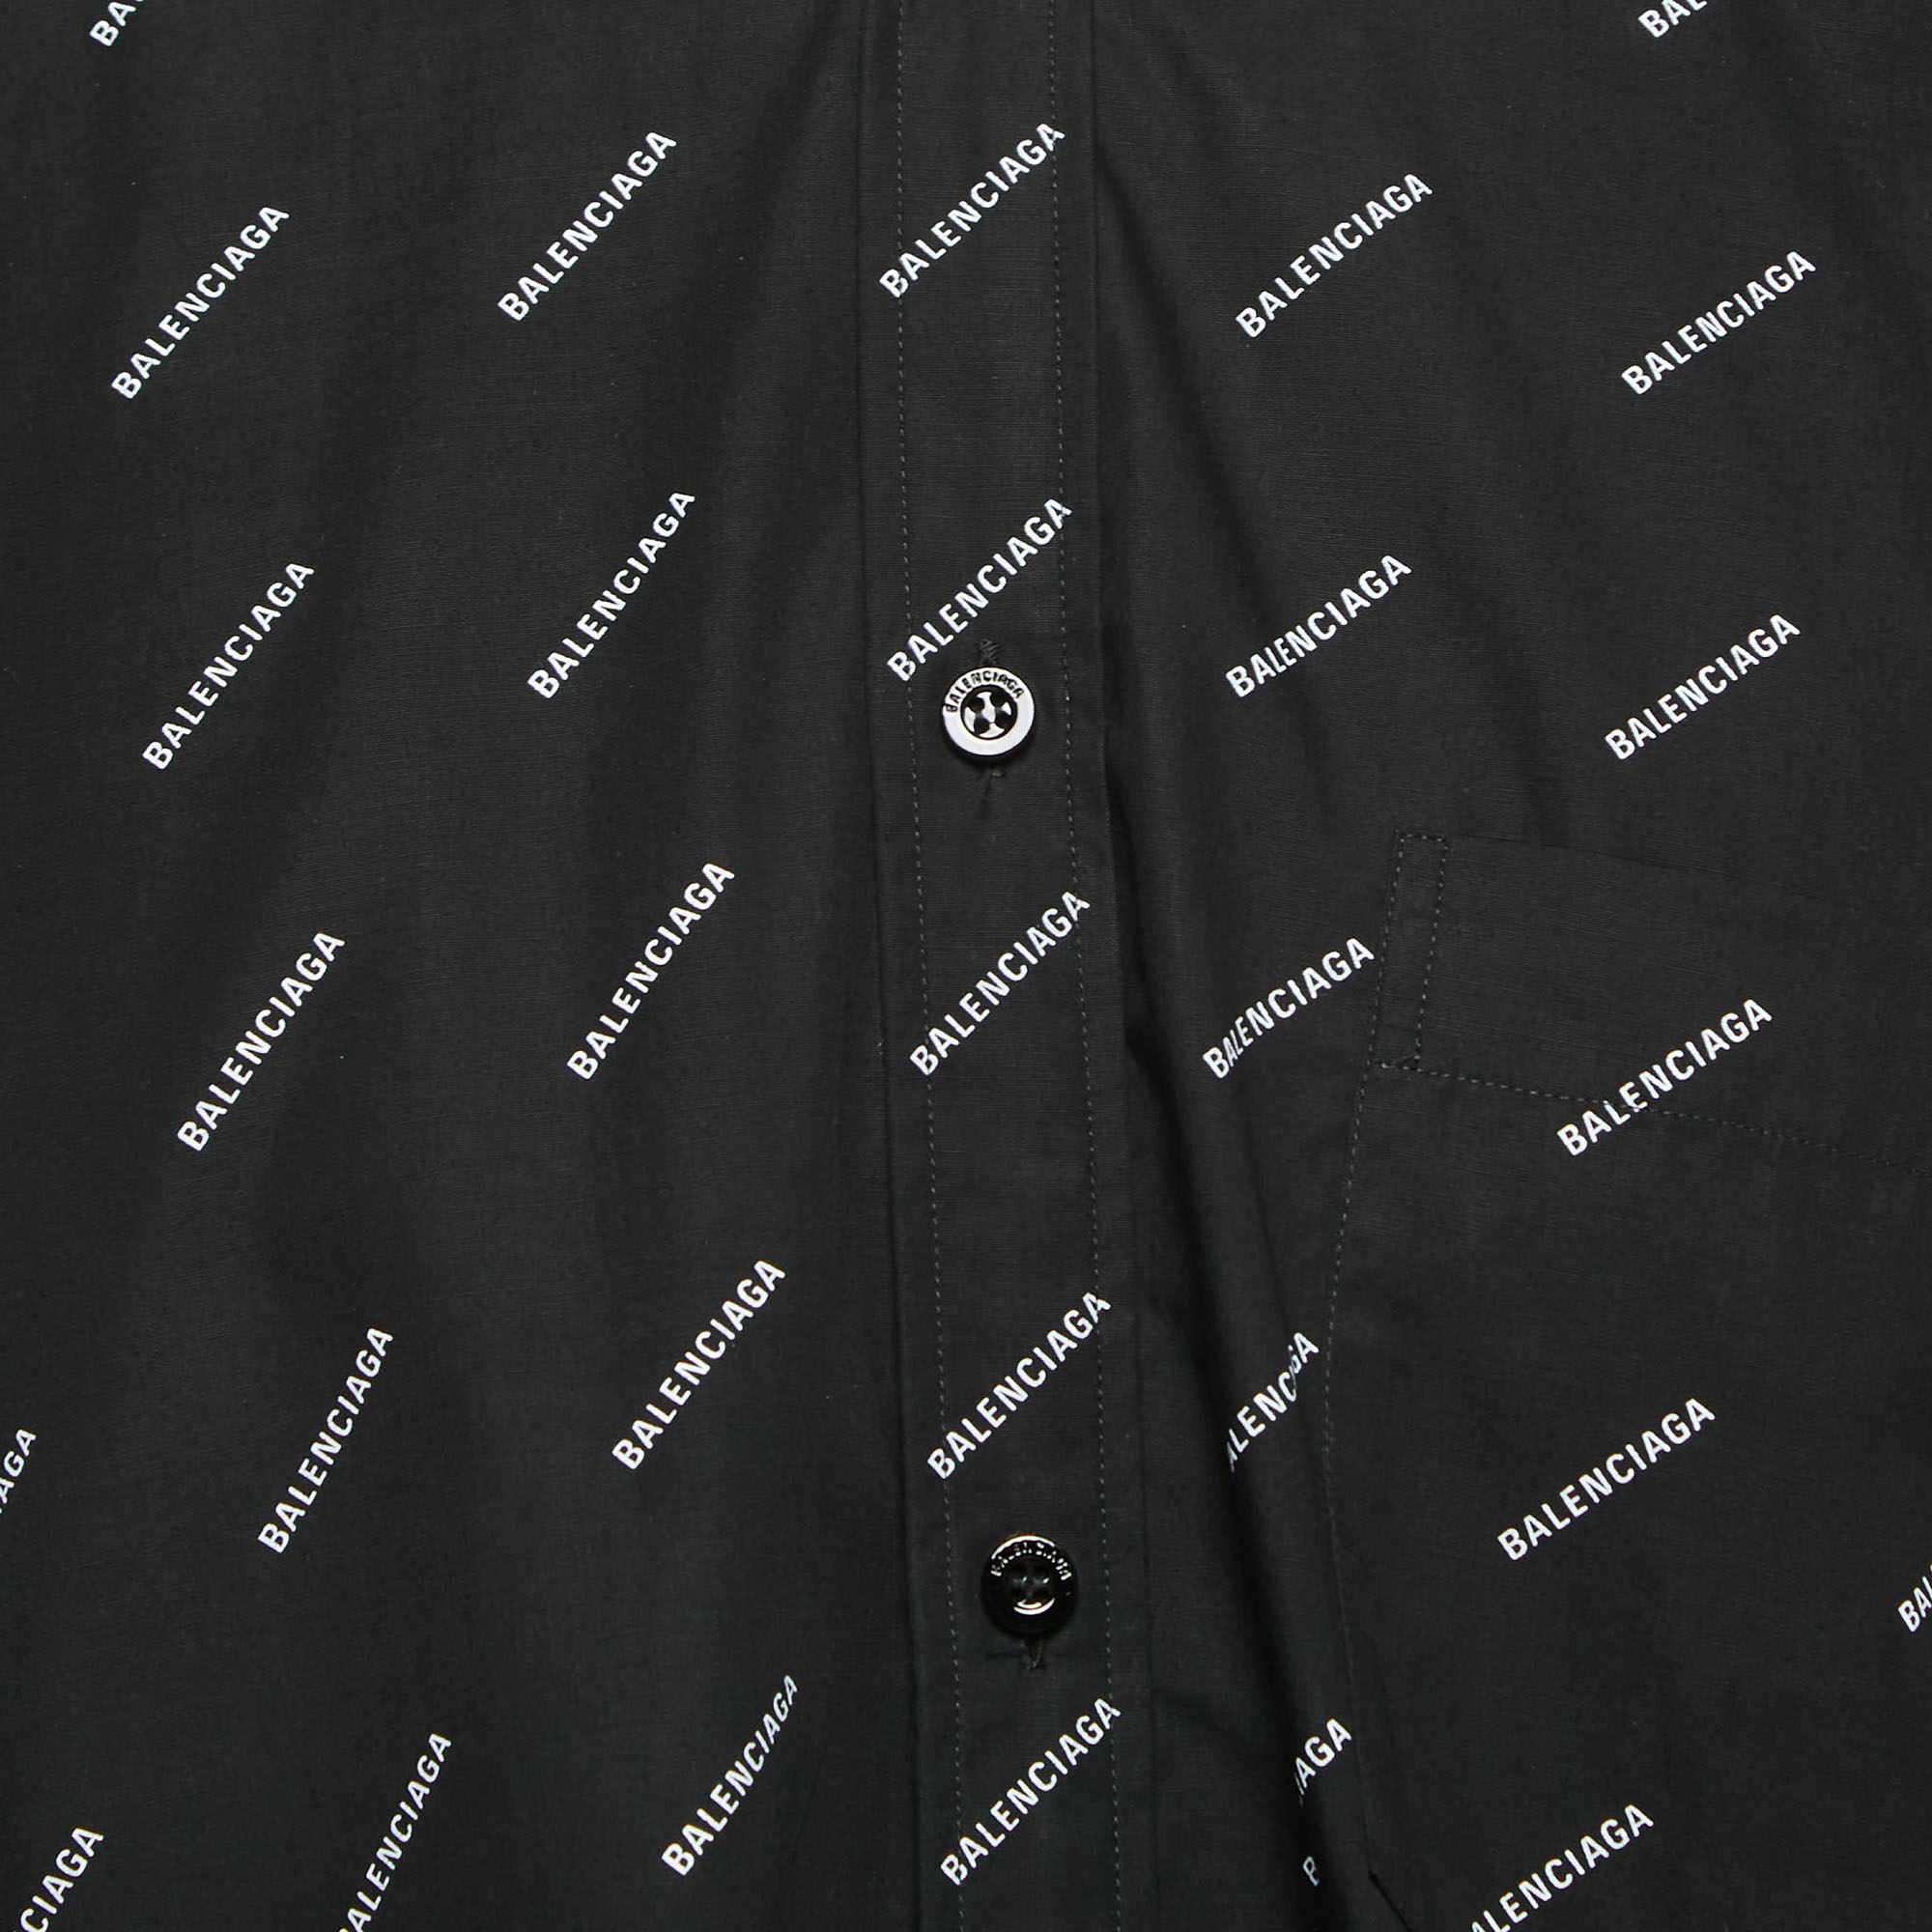 Balenciaga Black All-Over Logo Print Cotton Button Down Full Sleeve Shirt M